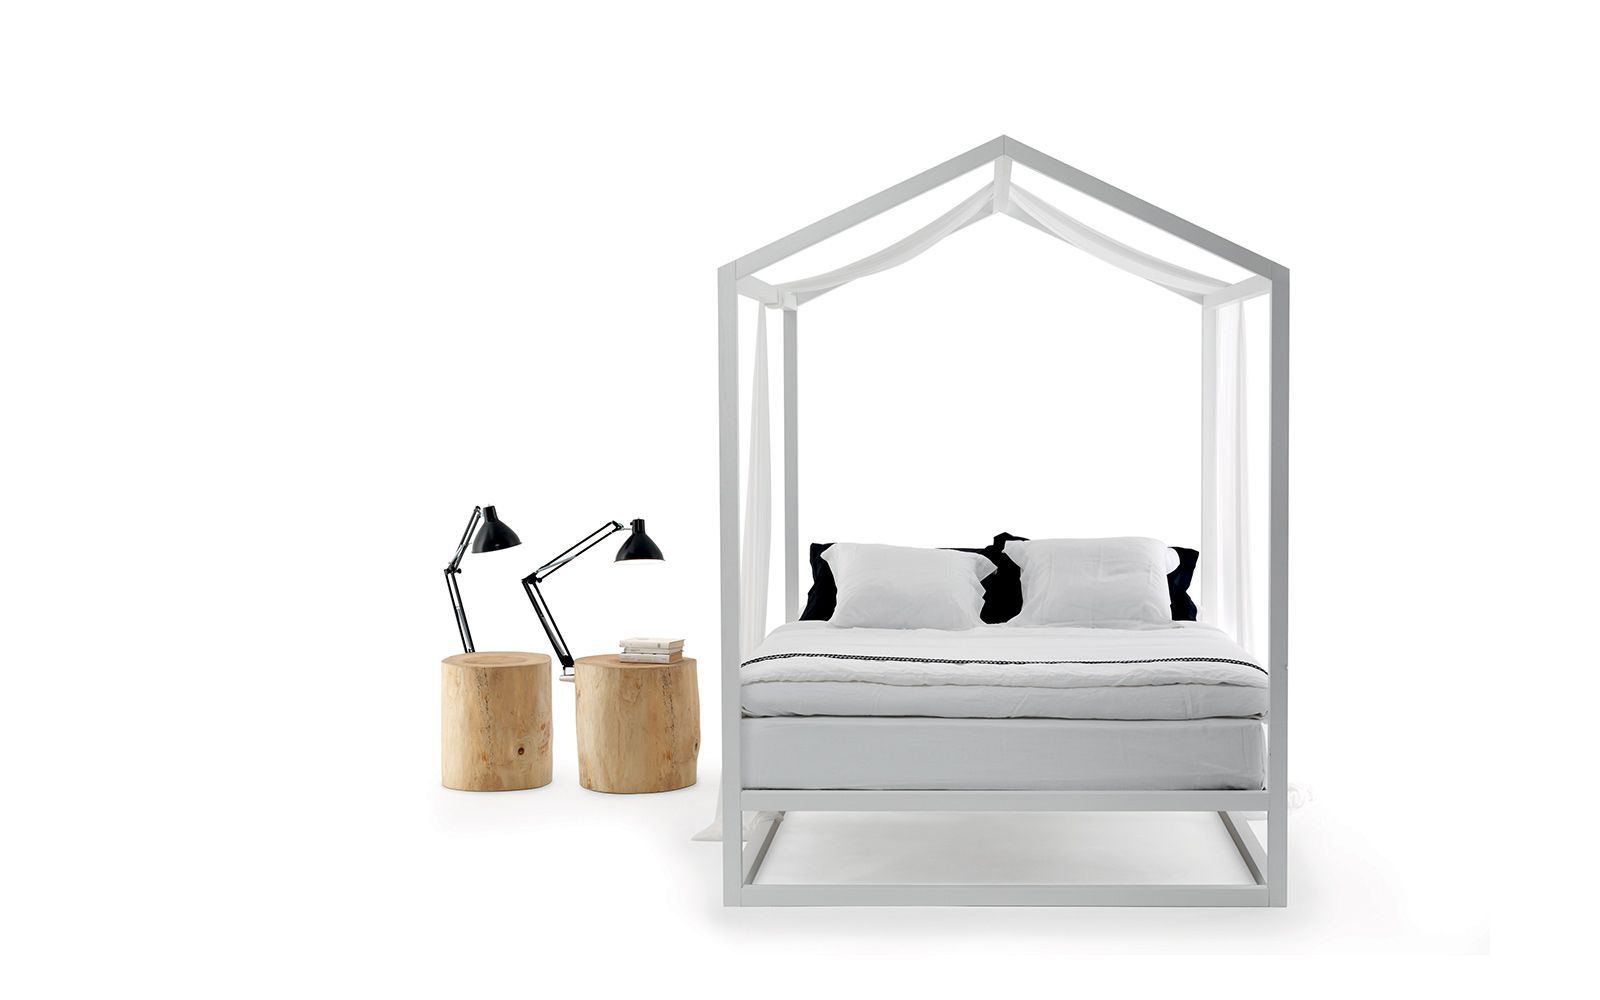 Minimalist Casetta Bed design